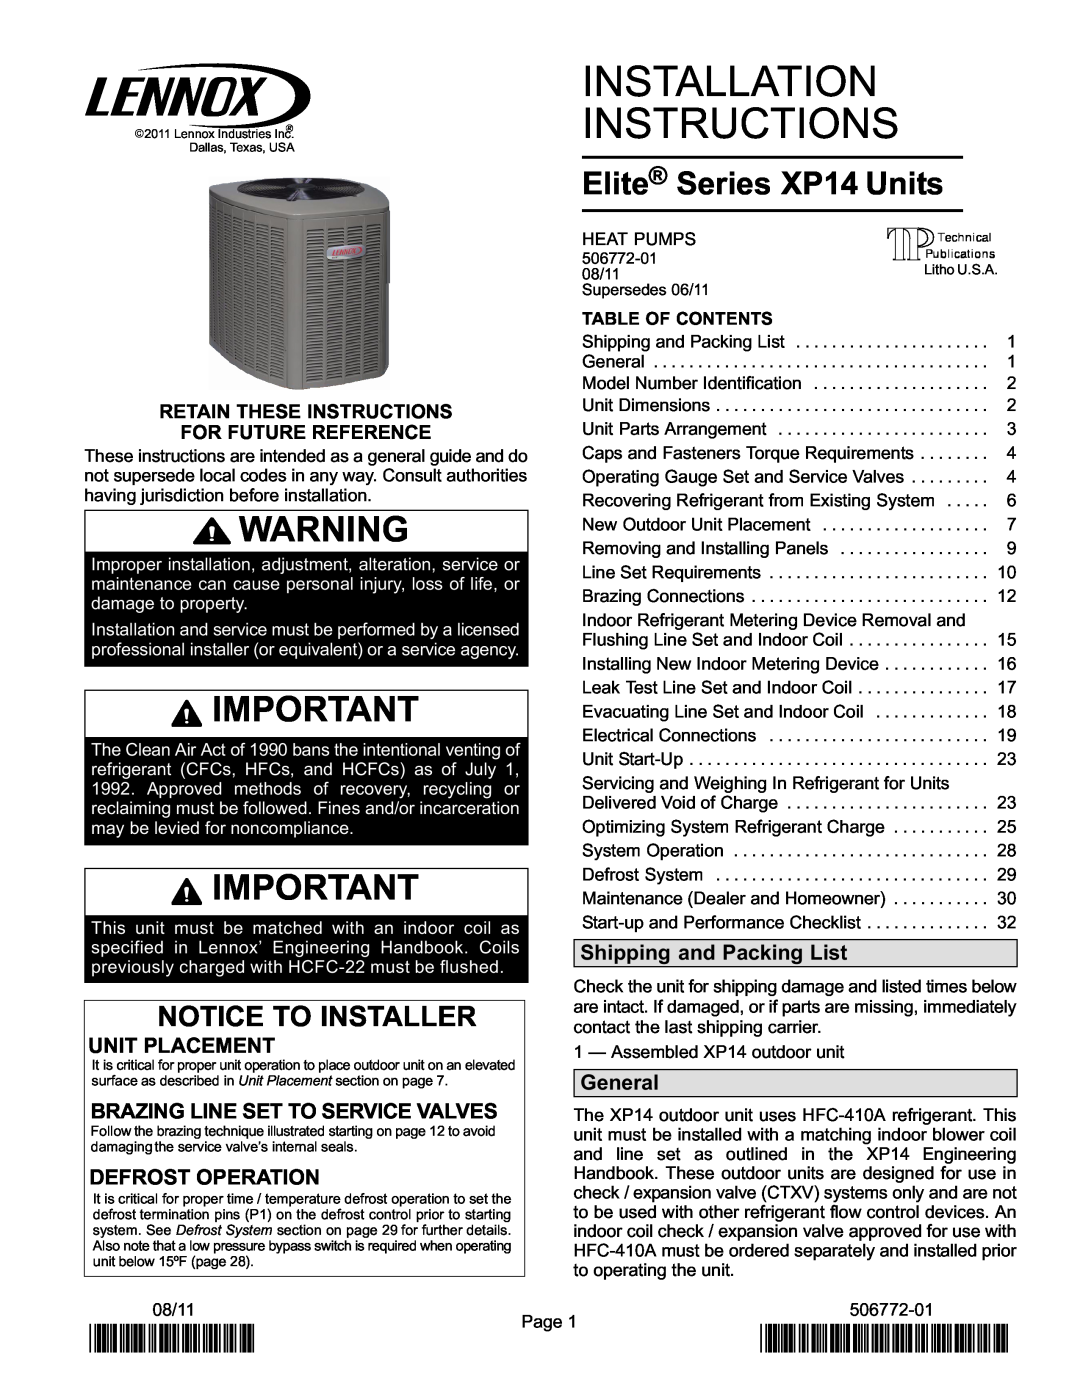 Lenox Elite Series XP14 Units HEAT PUMPS installation instructions Notice To Installer, 2P0811, P506772-01, Unit Placement 